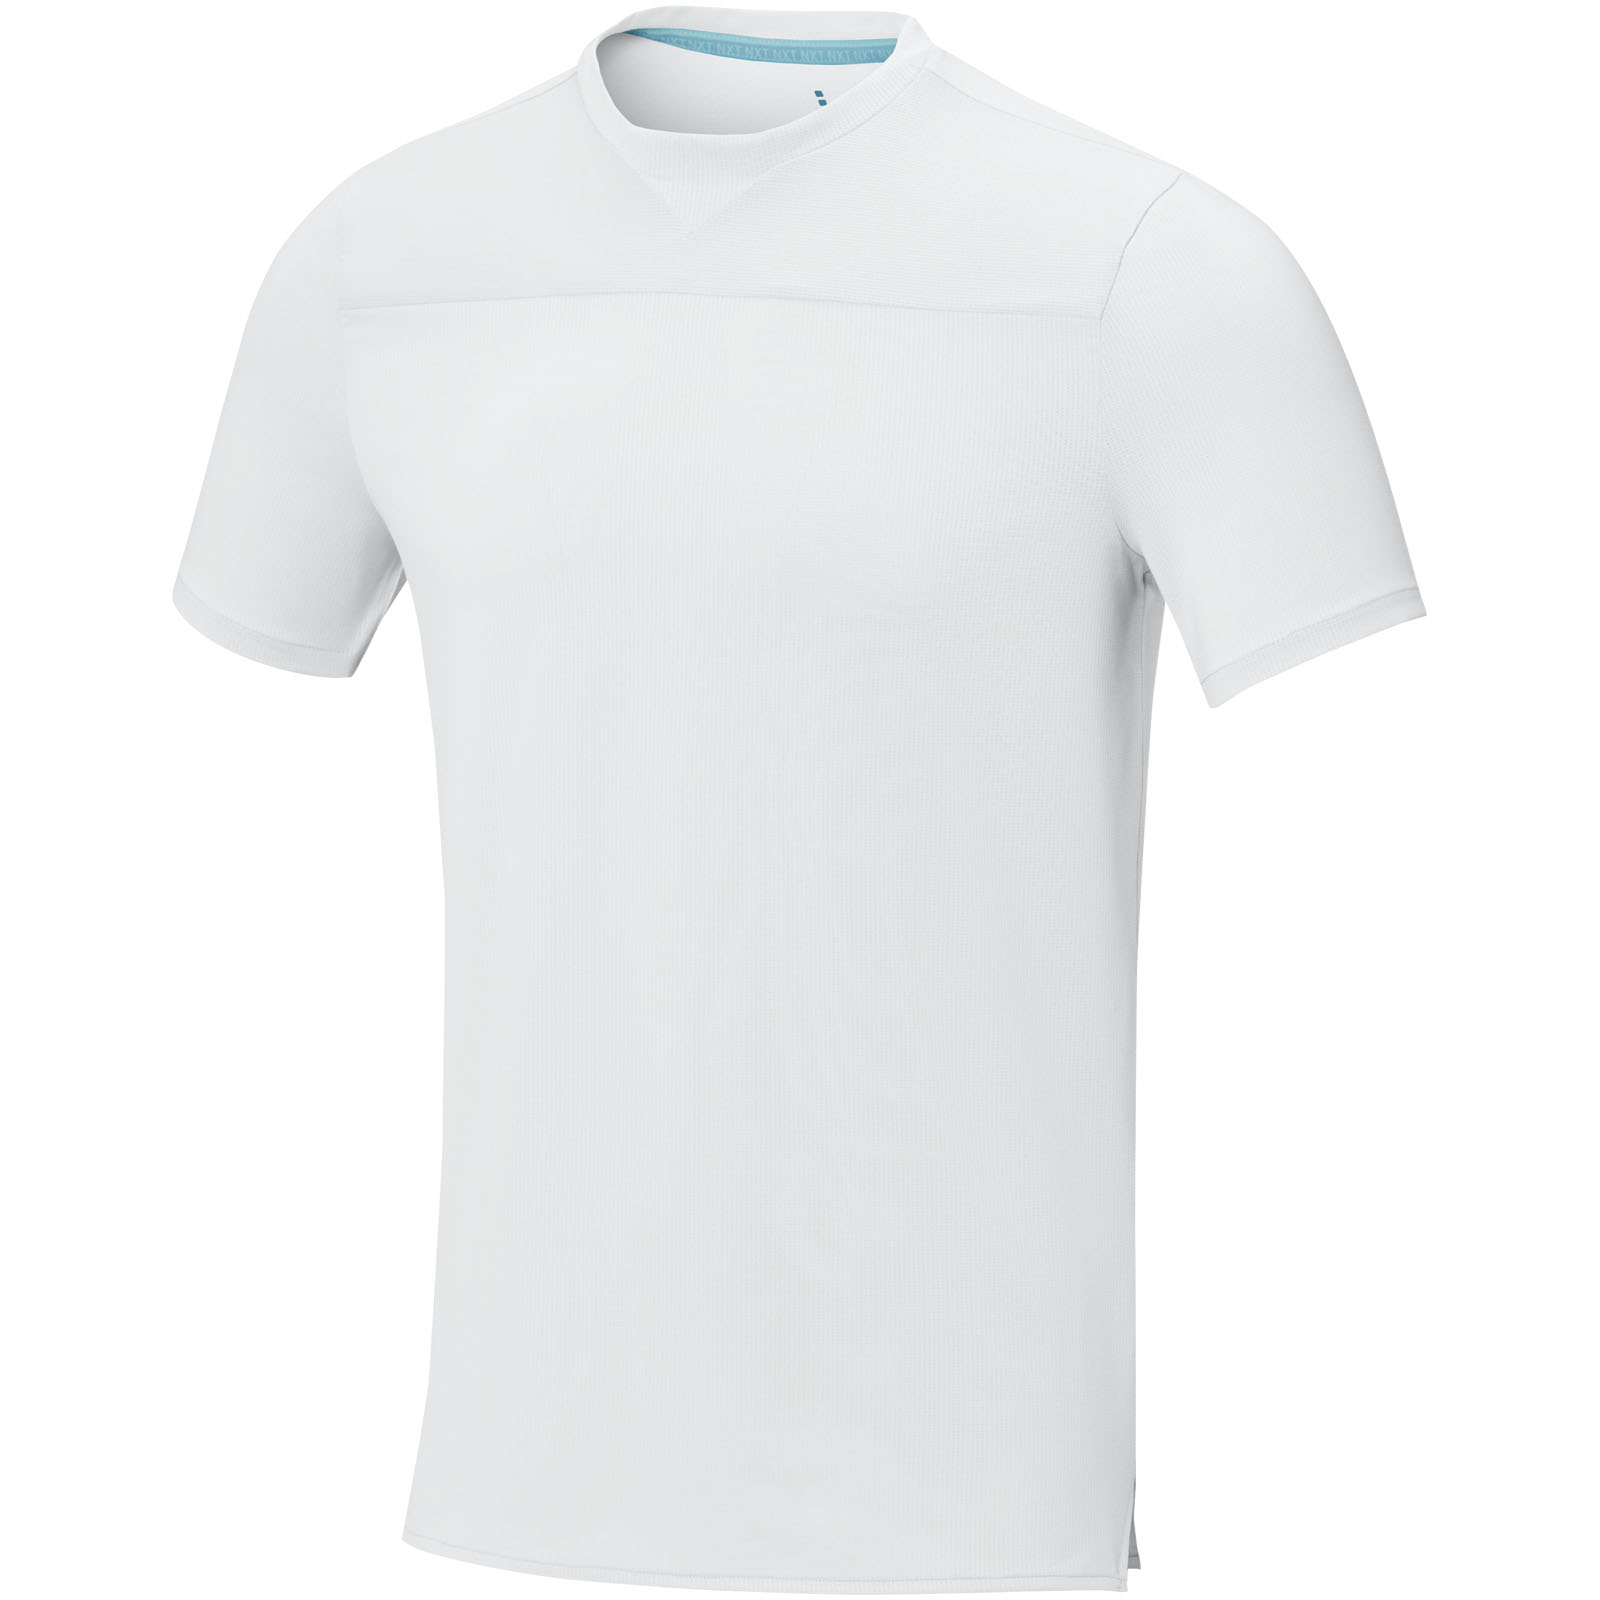 T-shirts - Borax short sleeve men's GRS recycled cool fit t-shirt